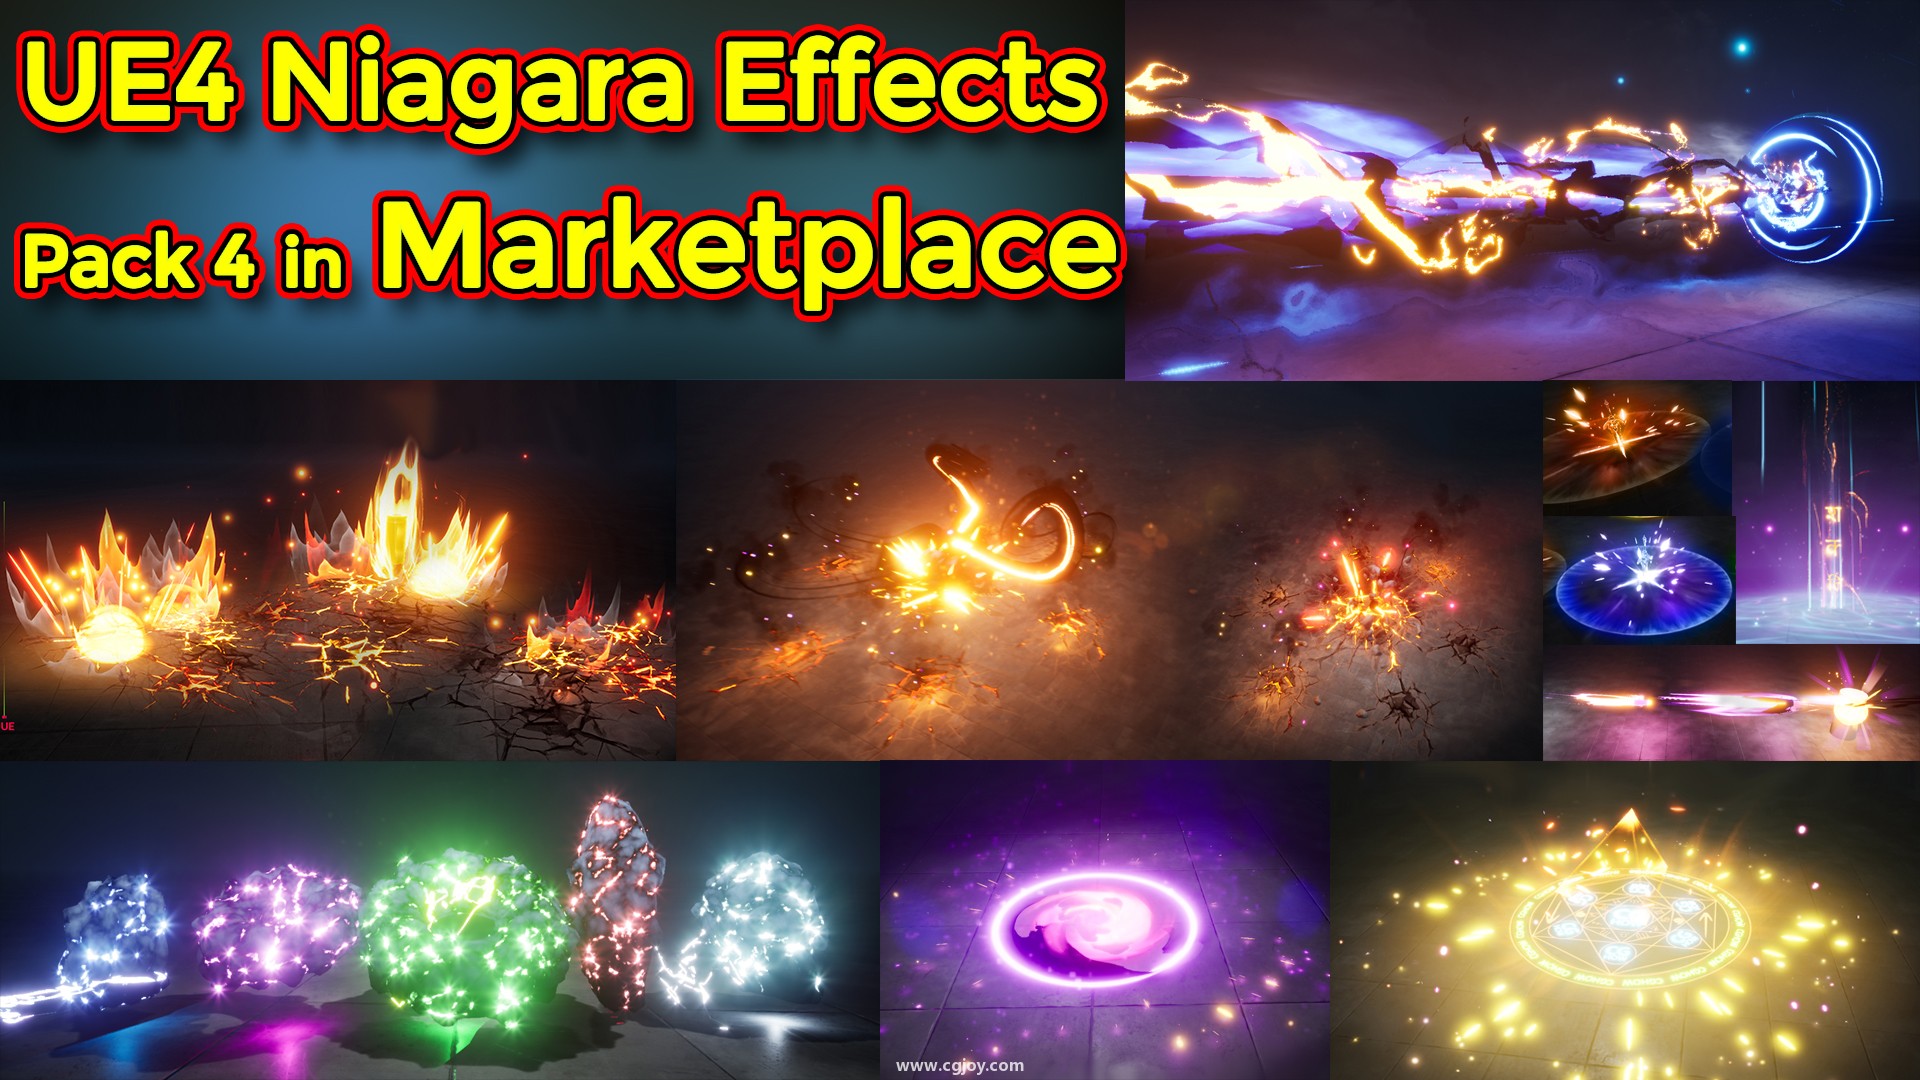 niagara effect04.jpg